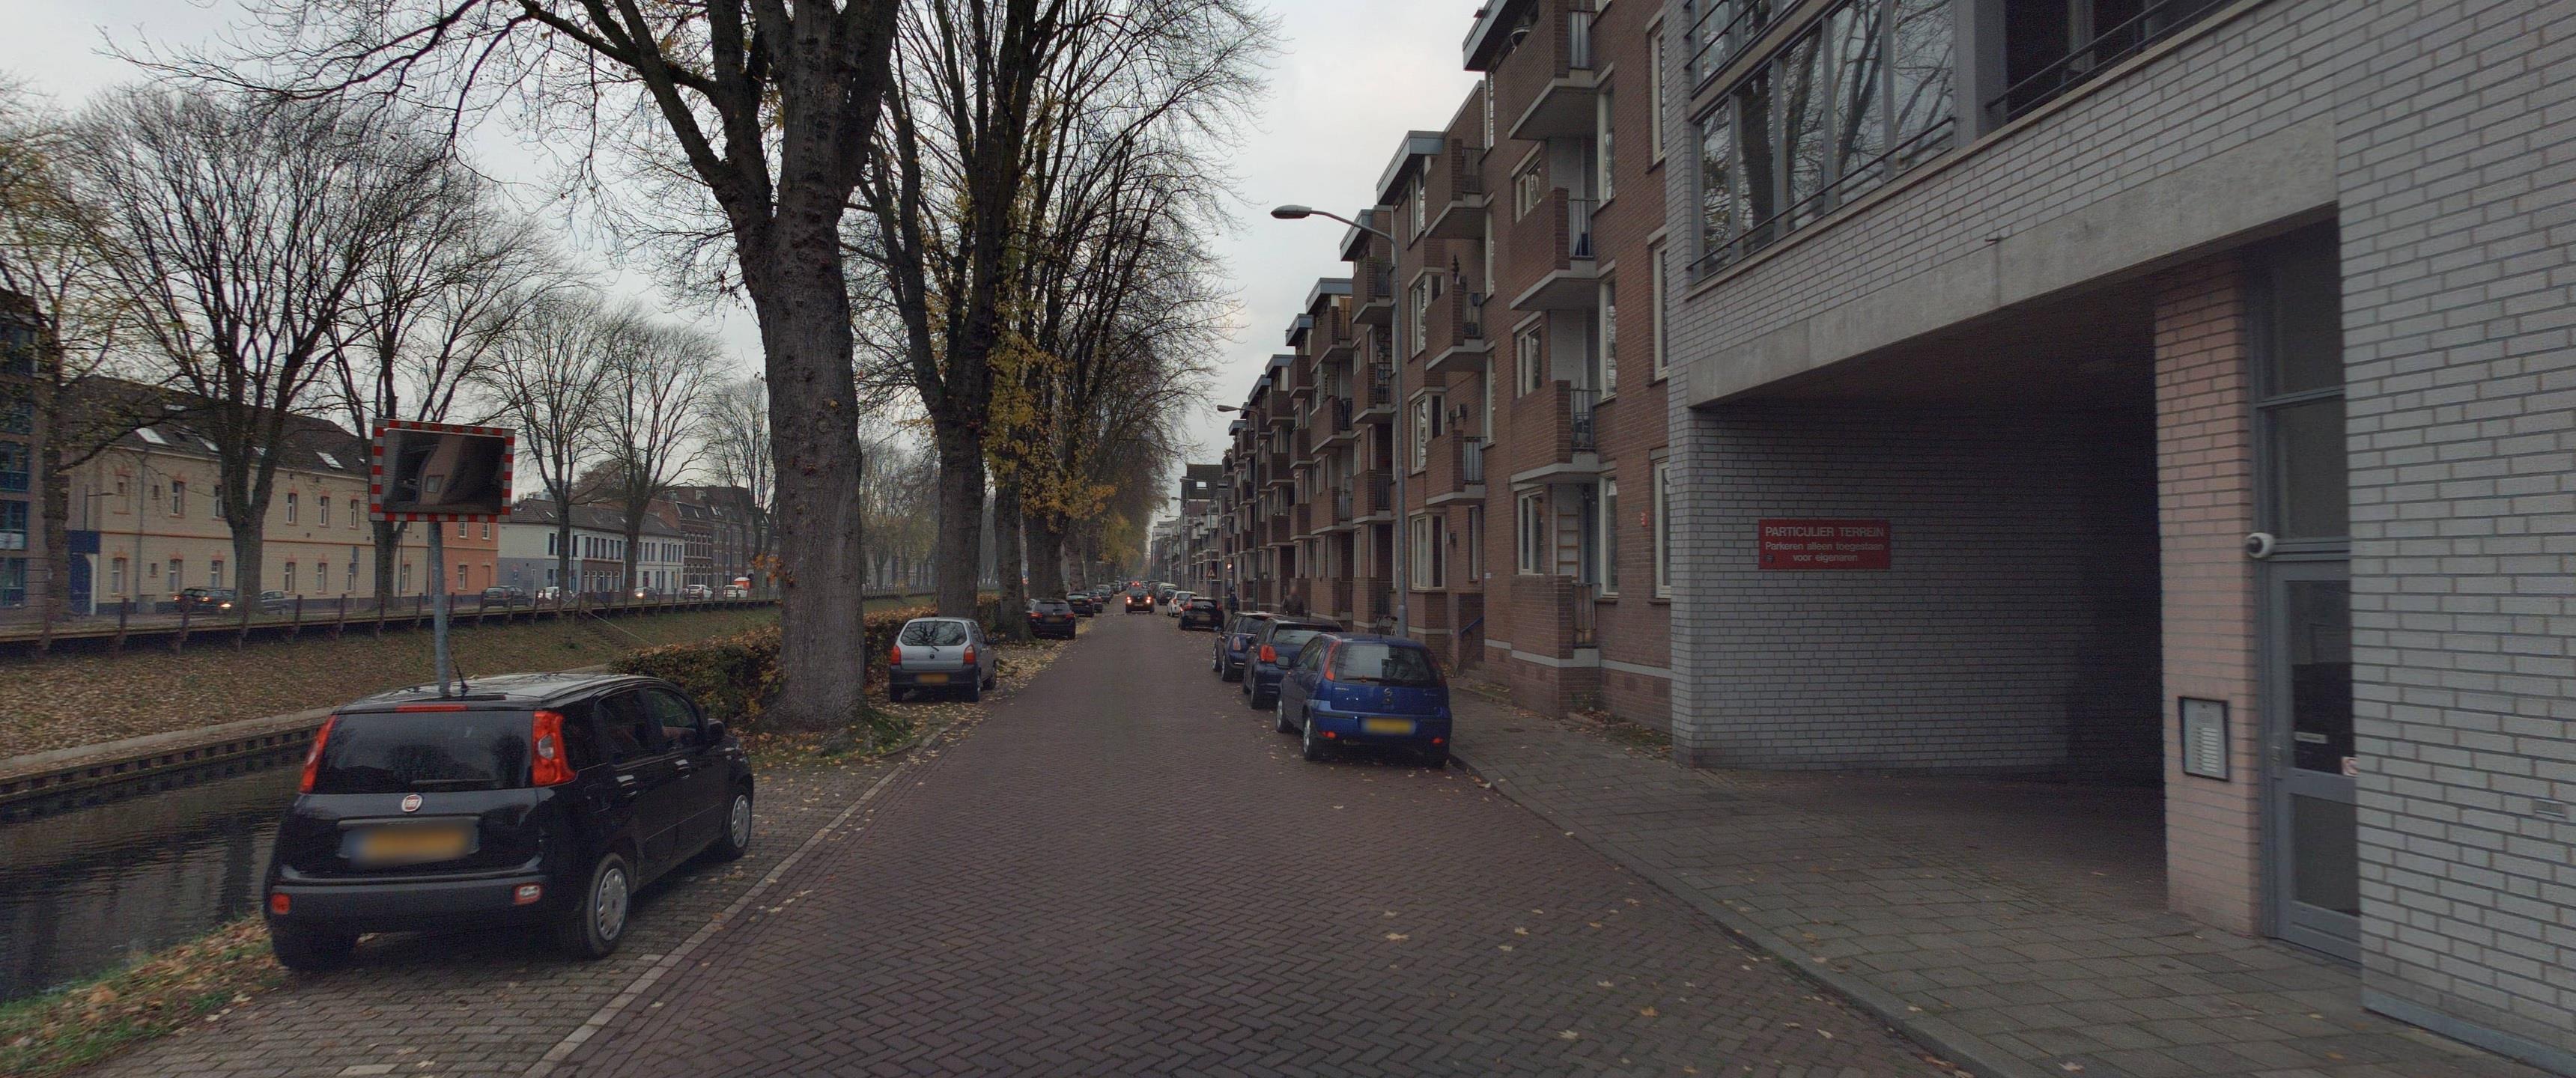 Zuid-Willemsvaart 408